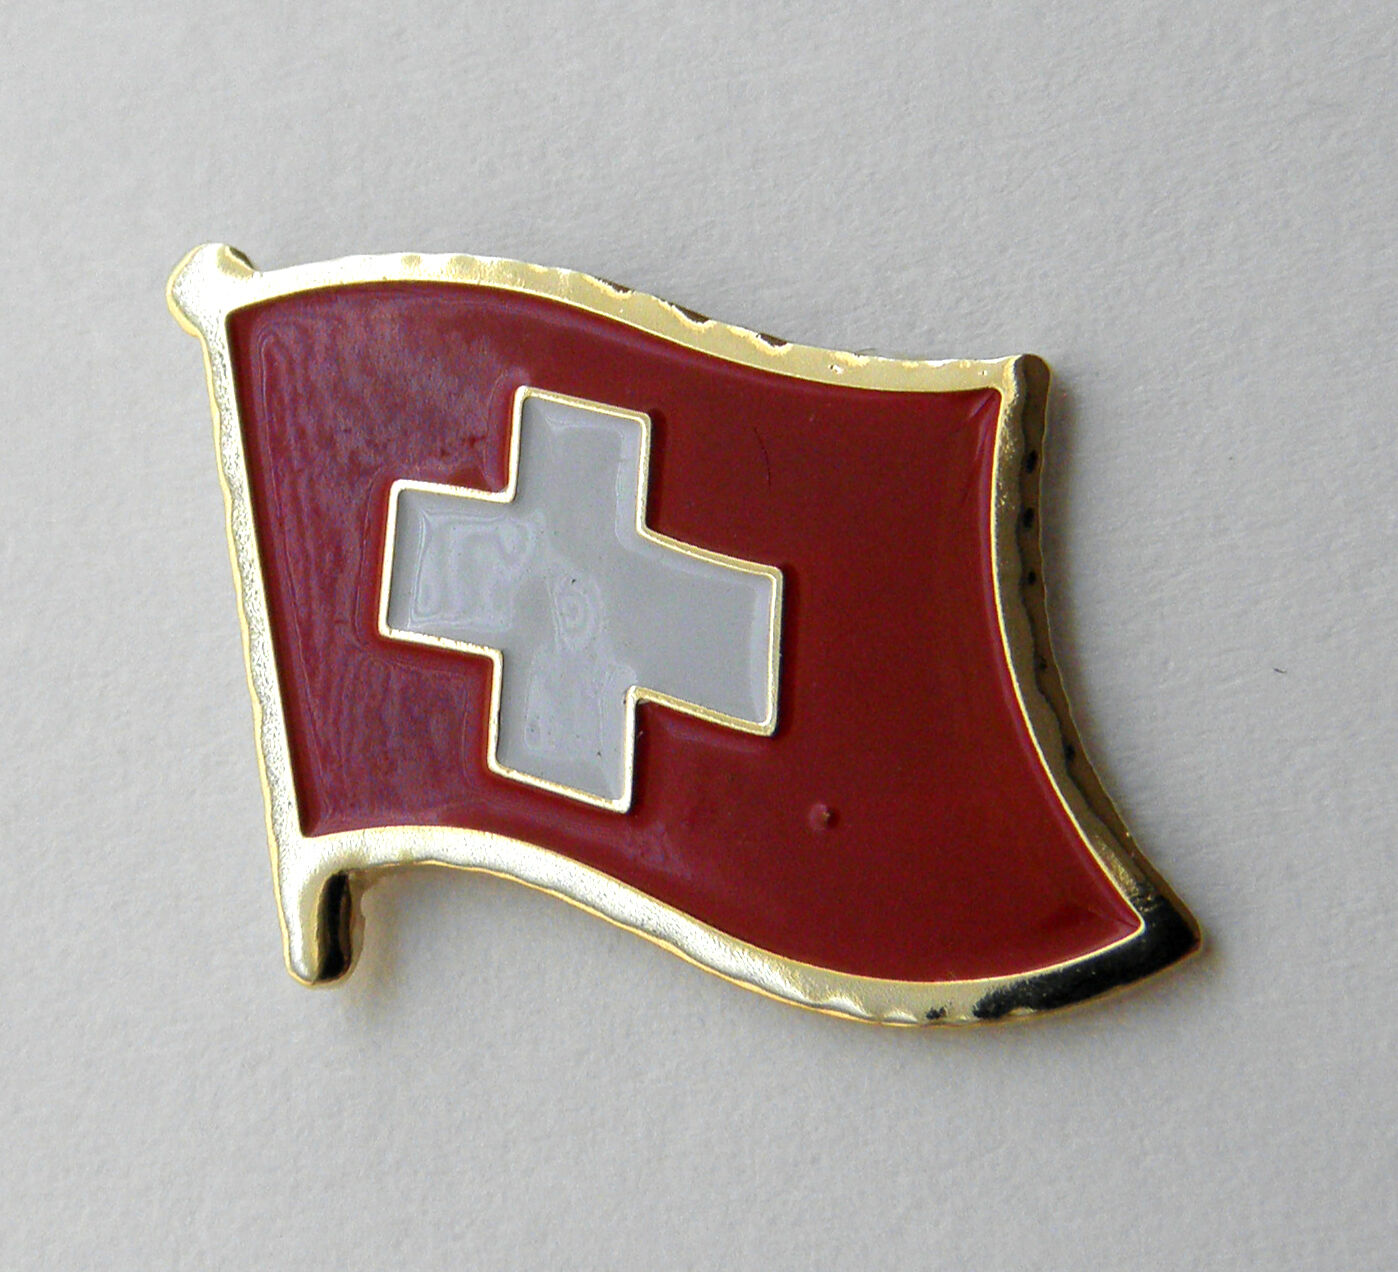 SWITZERLAND SWISS INTERNATIONAL COUNTRY SINGLE FLAG LAPEL PIN BADGE 3/4 INCH